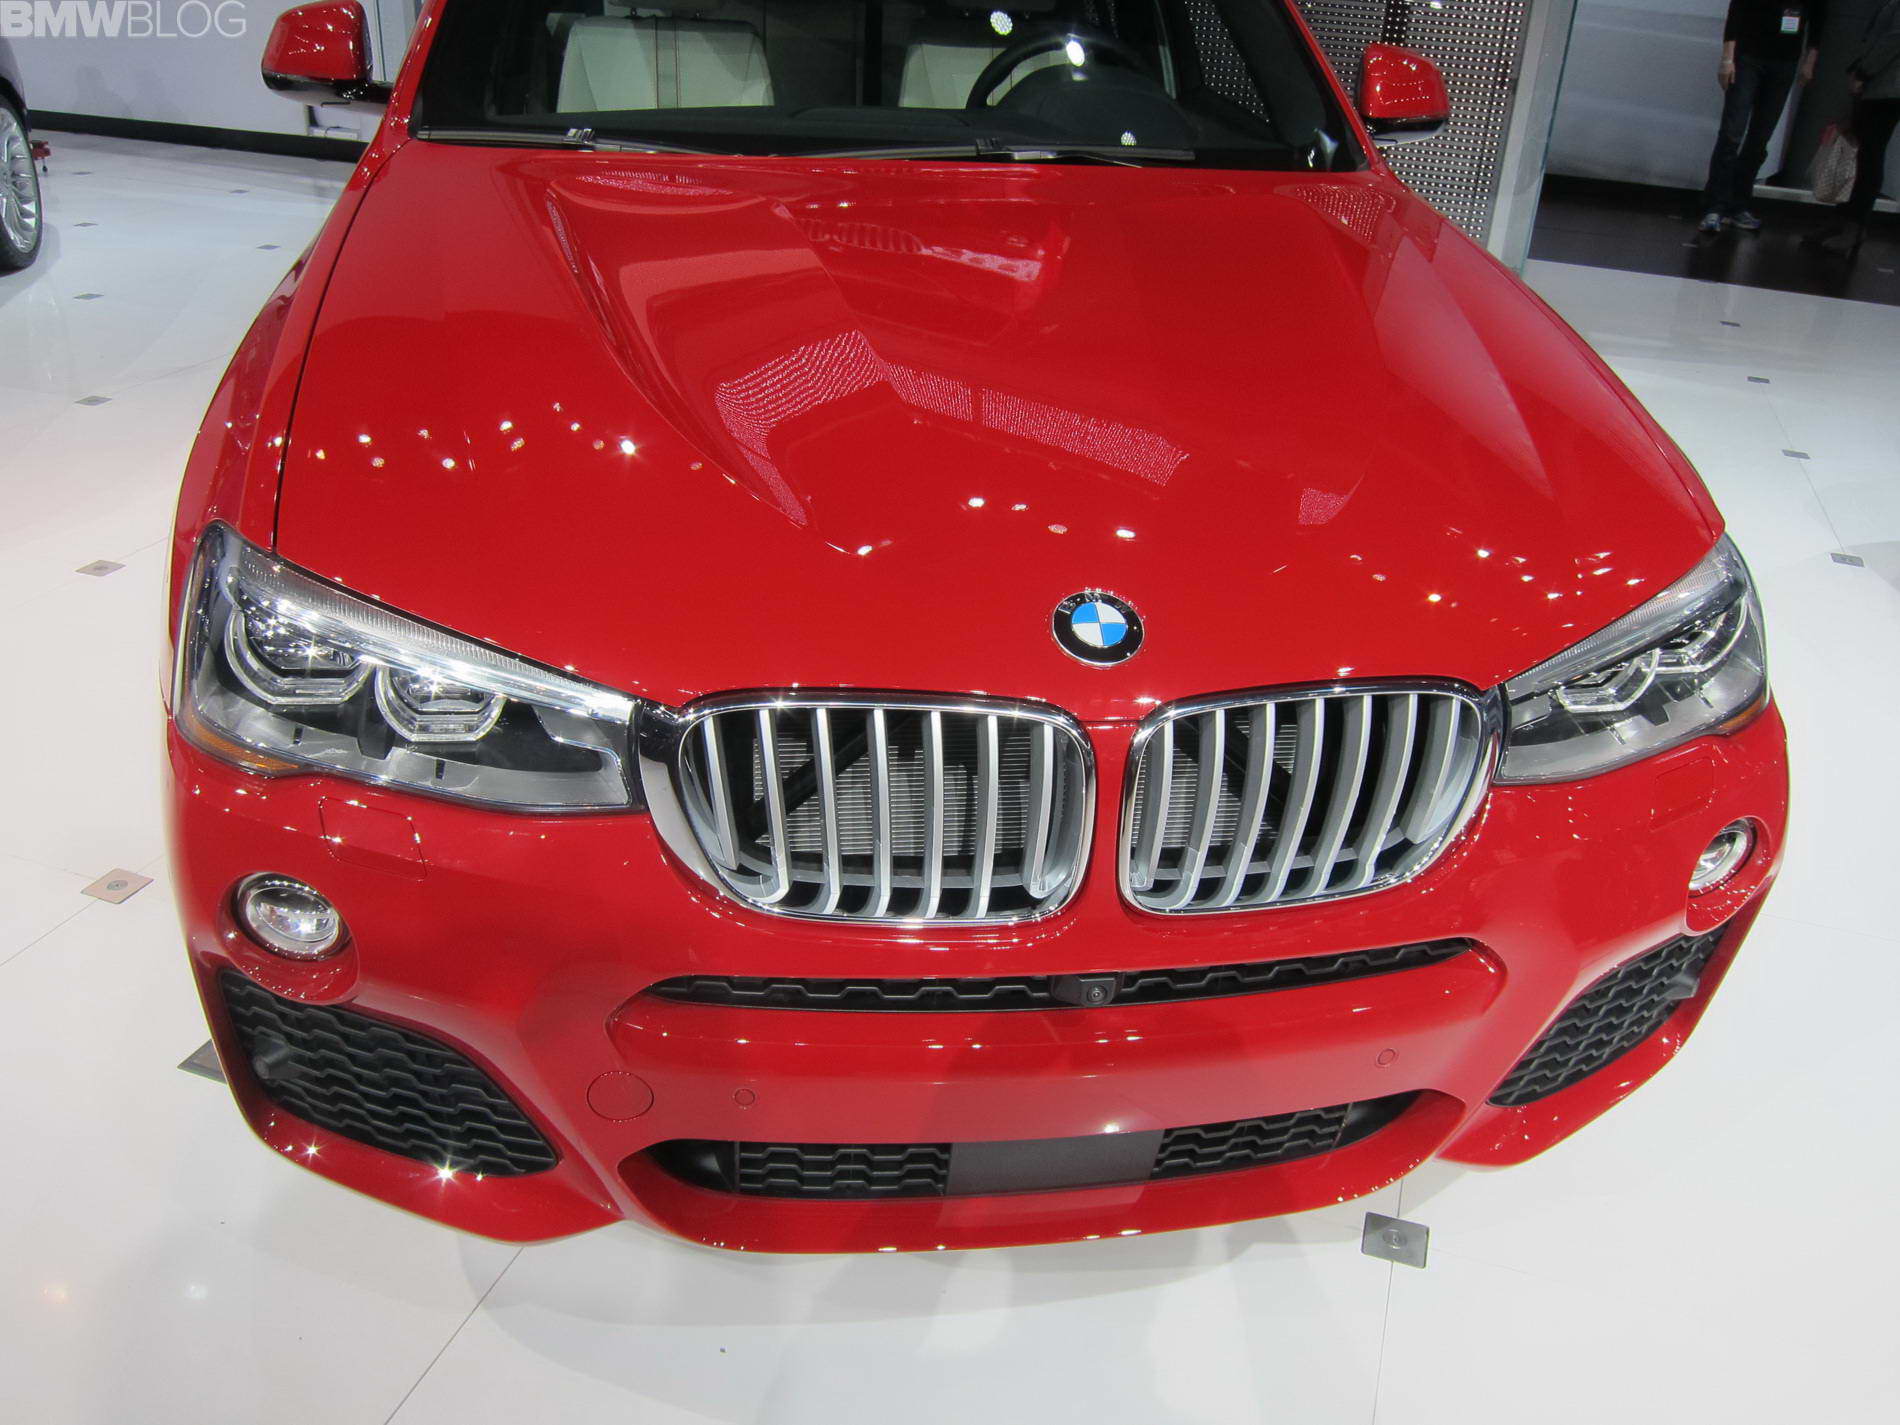 BMW X4 2014 World premiere